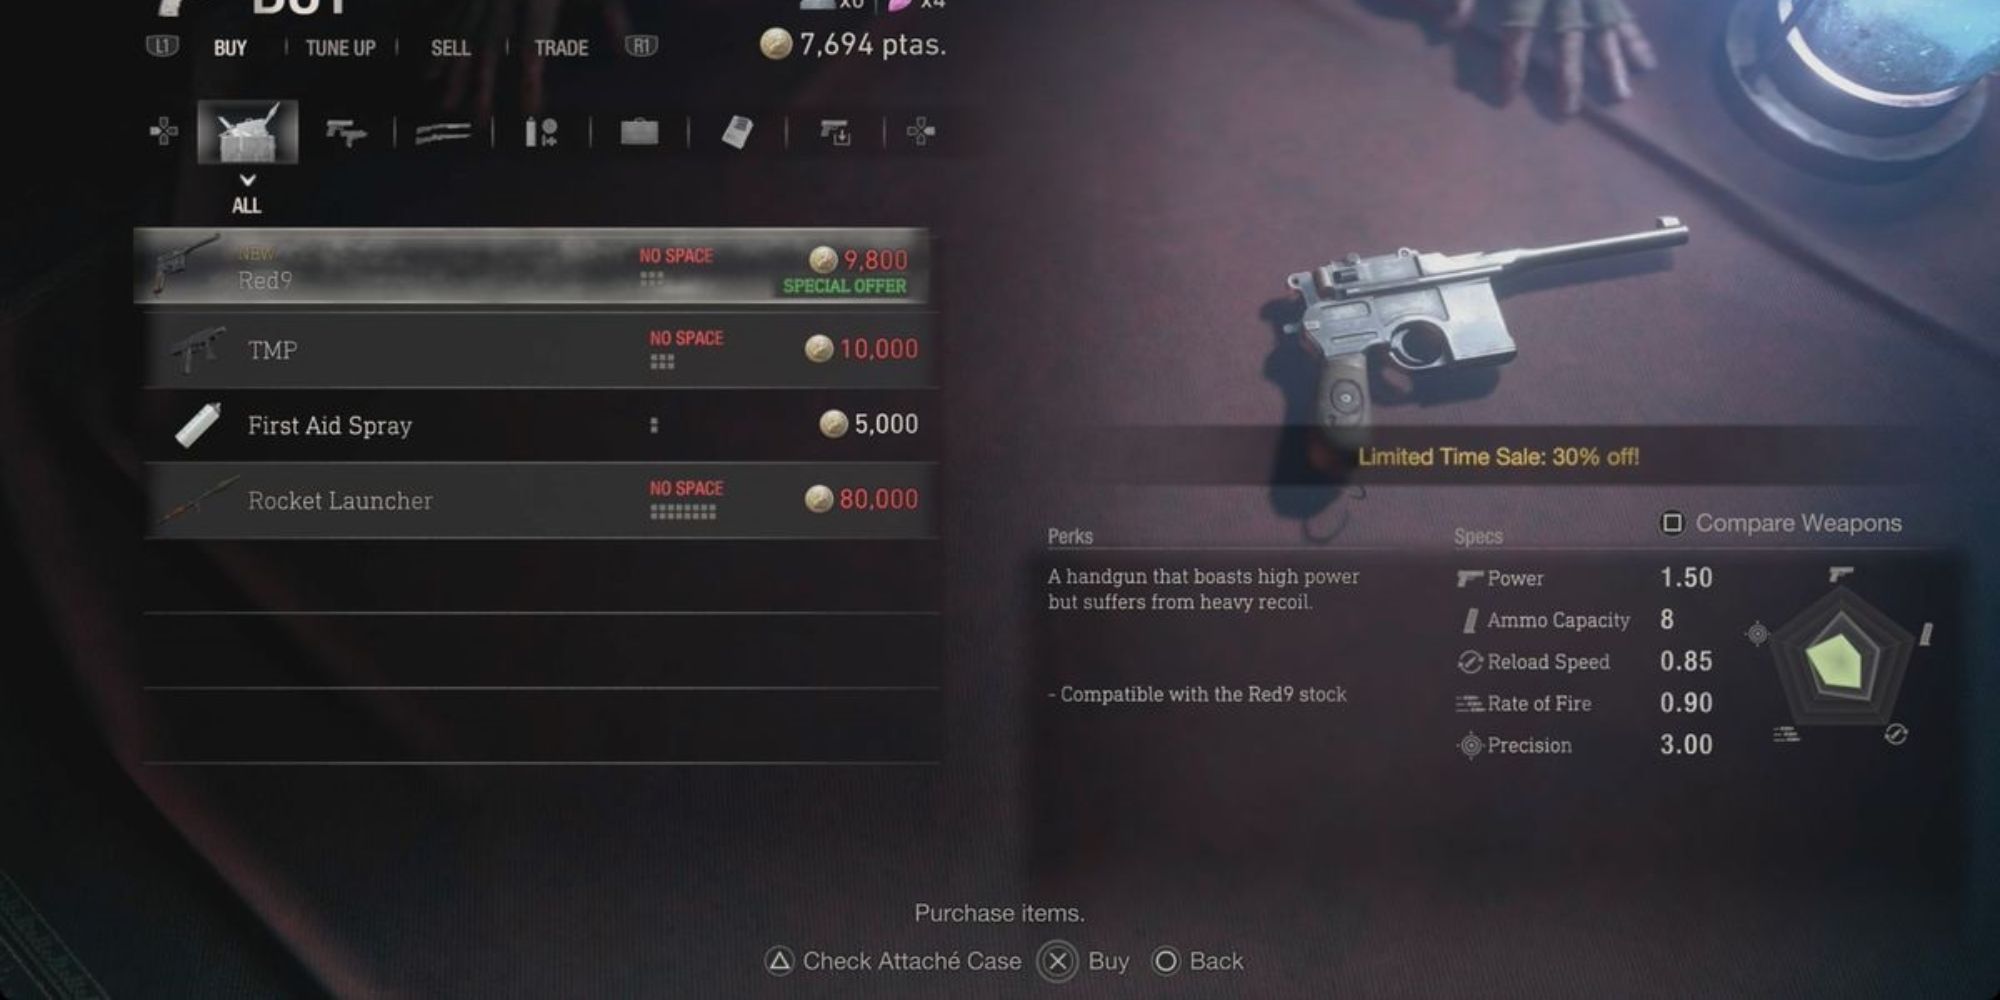 capcom re4 remake red9 pistol is under upgrade in the merchant